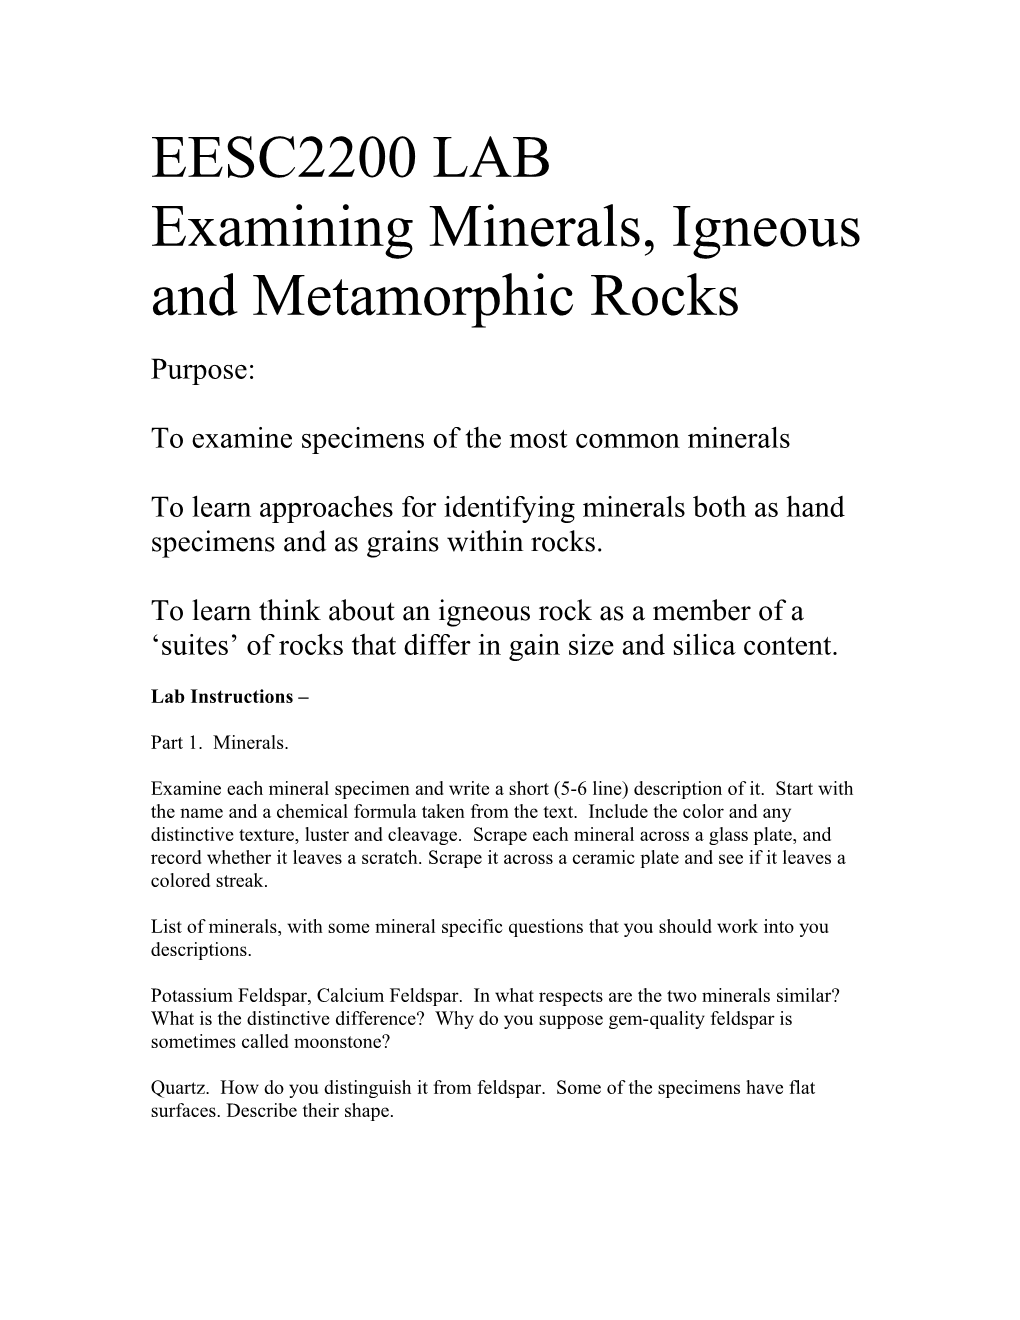 EESC2200 Lab - Examining Minerals, Igneous and Metamorphic Rocks